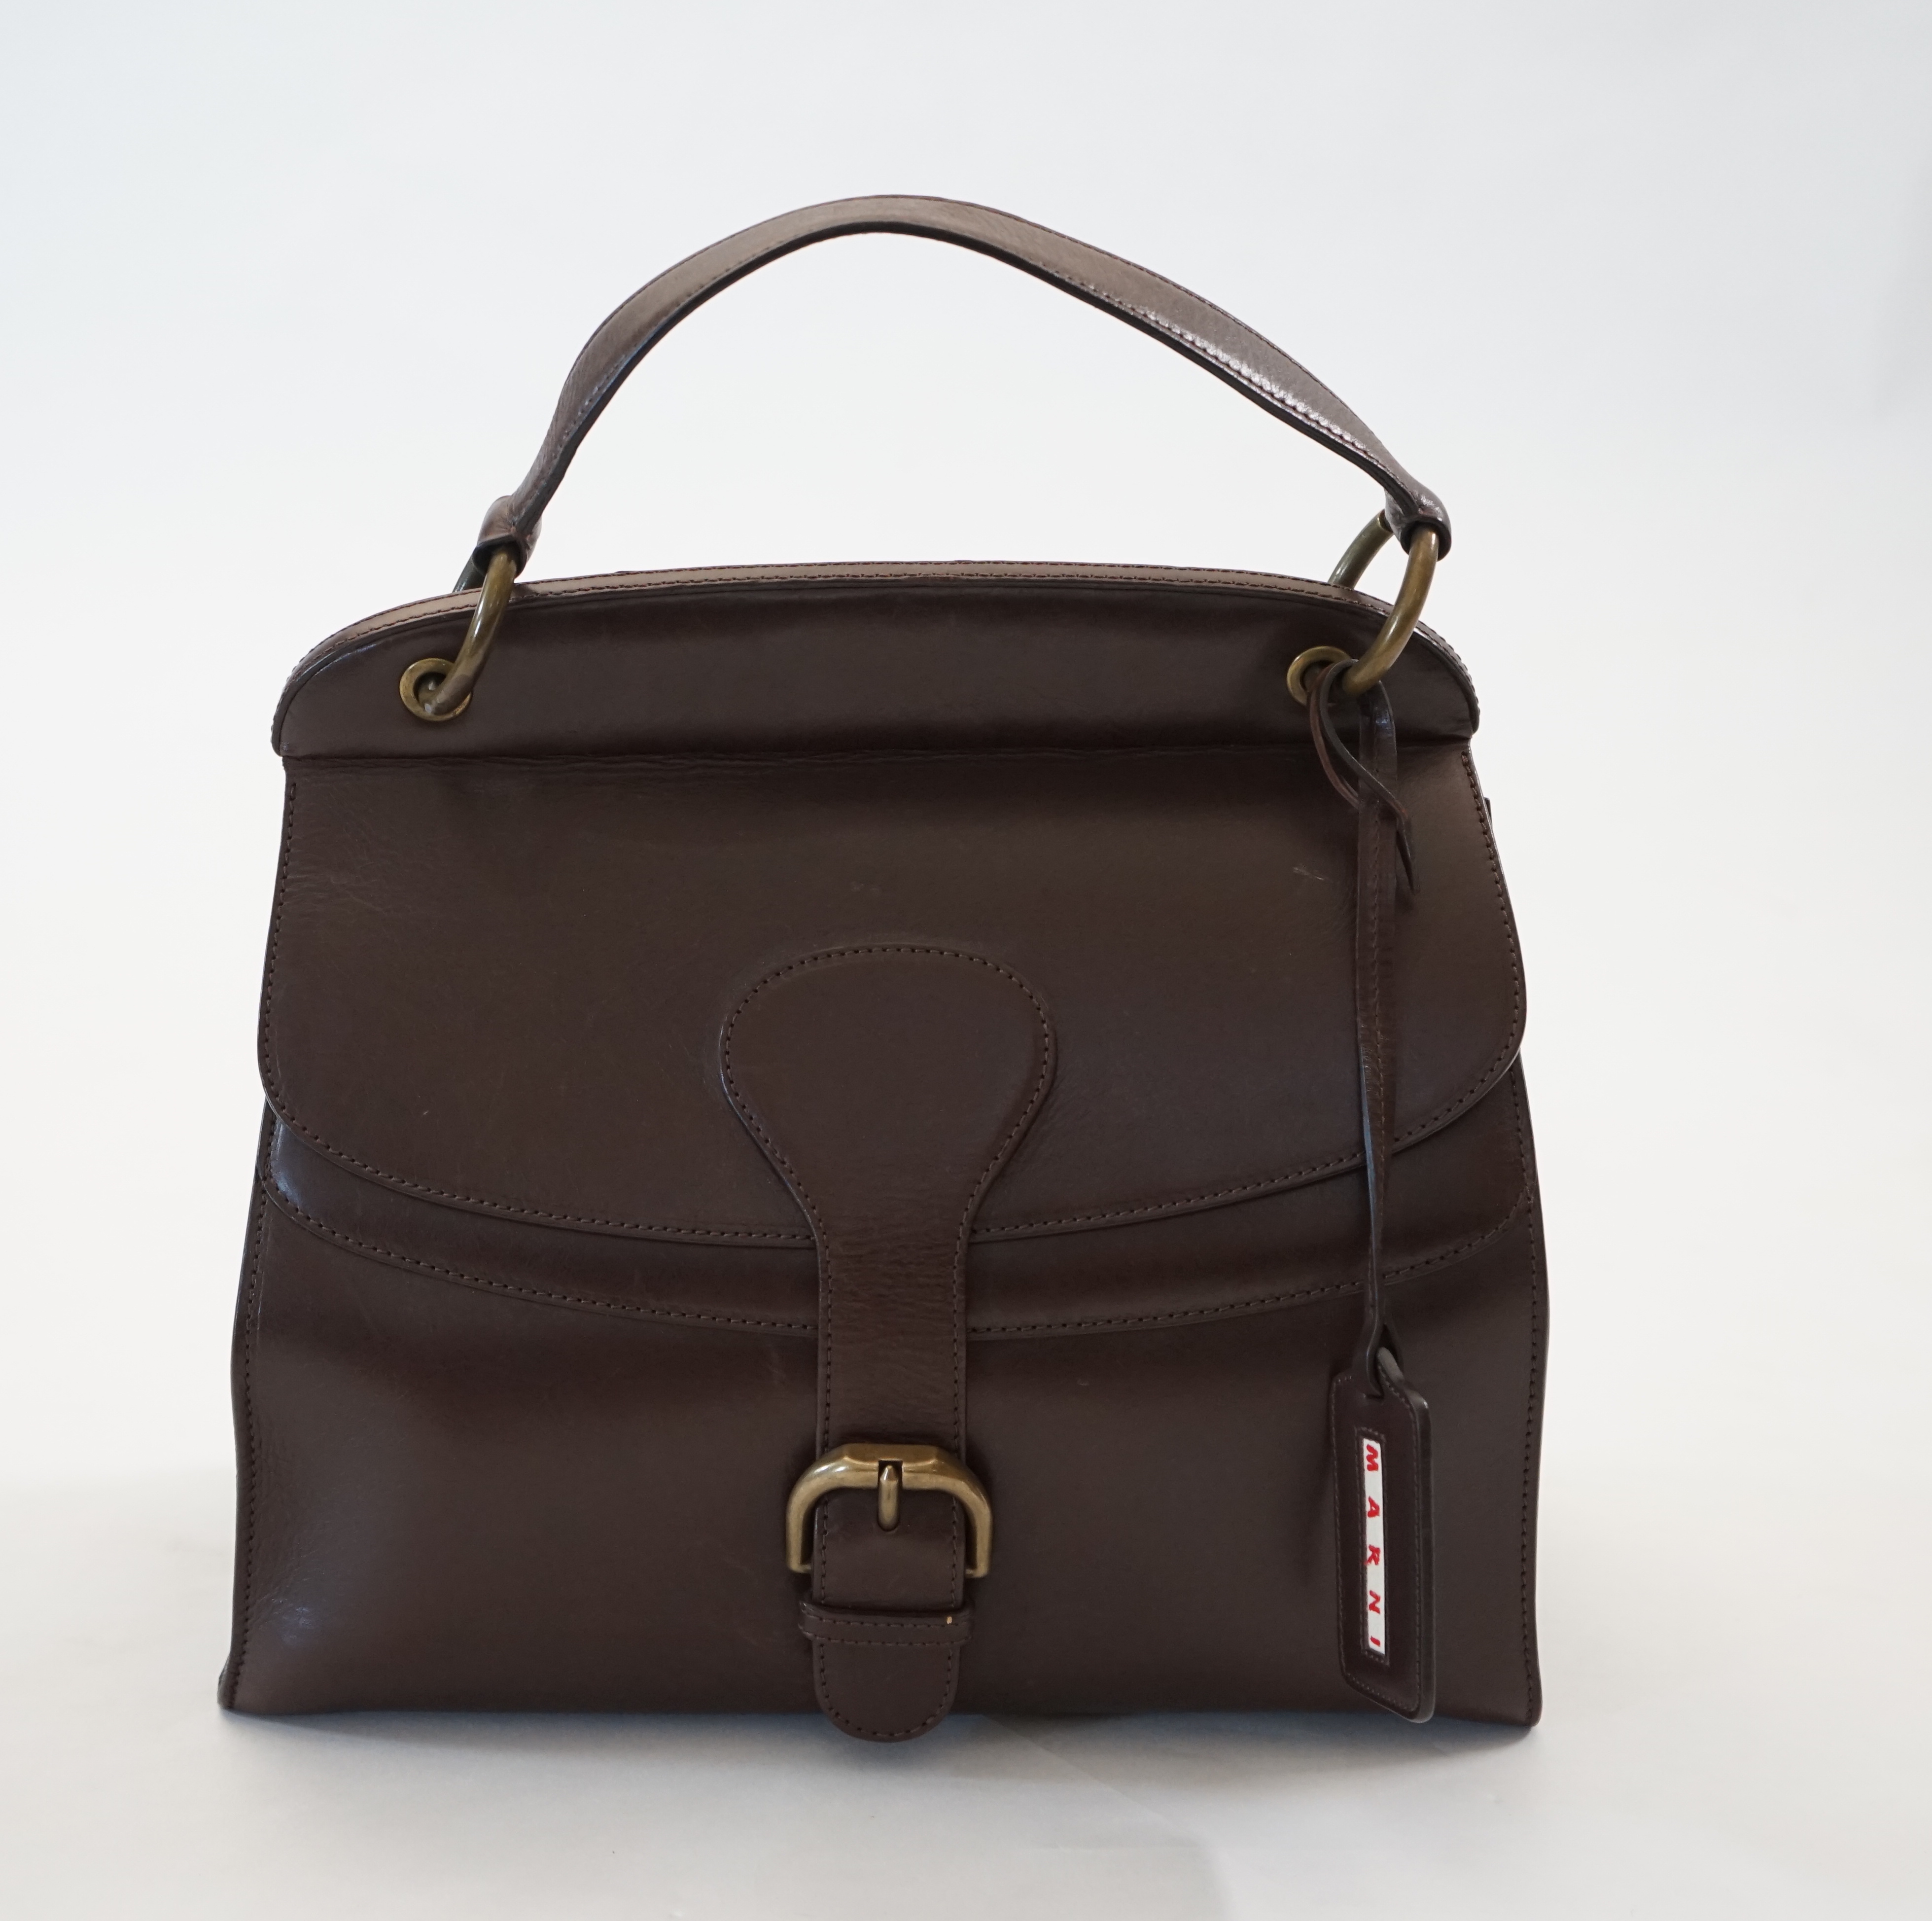 A Marni brown leather satchel bag, width 34cm, depth 18cm, height 28cm